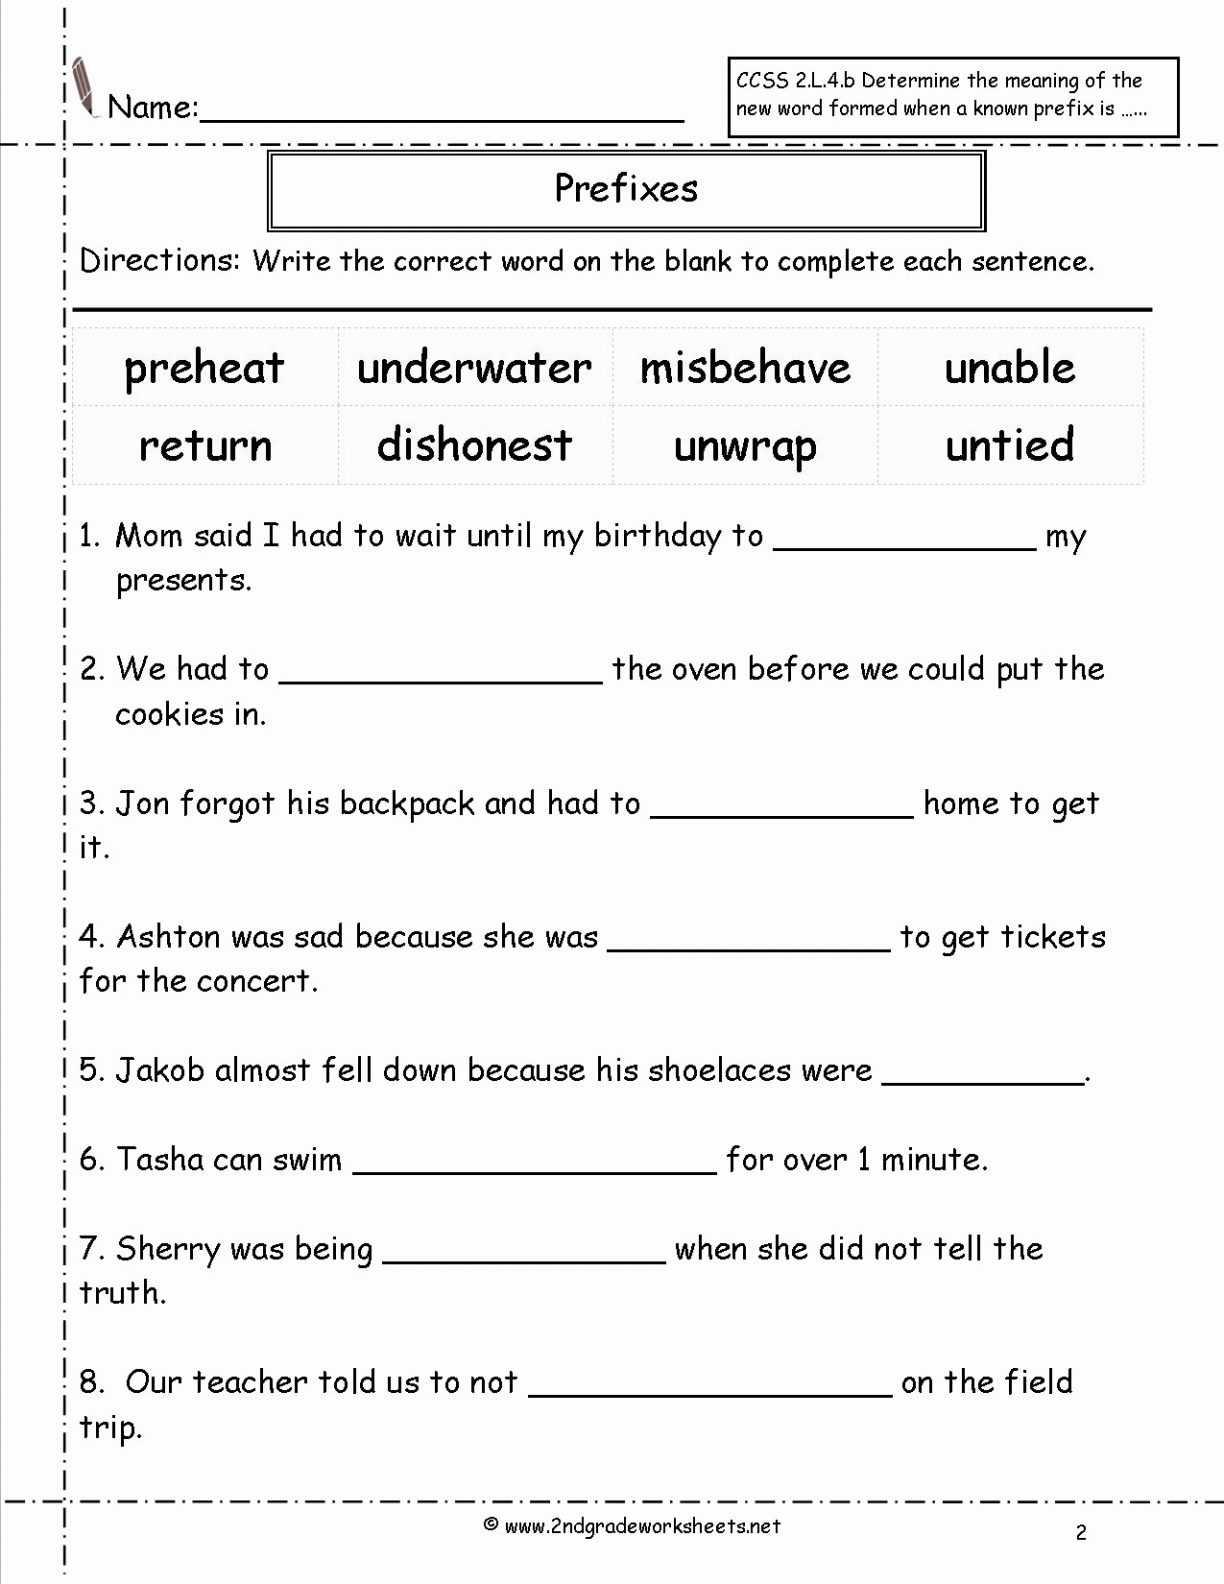 Multiple Meaning Words Worksheets 5th Grade as Well as Multiple Meaning Words Worksheets 2nd Grade Checks Worksheet Multi